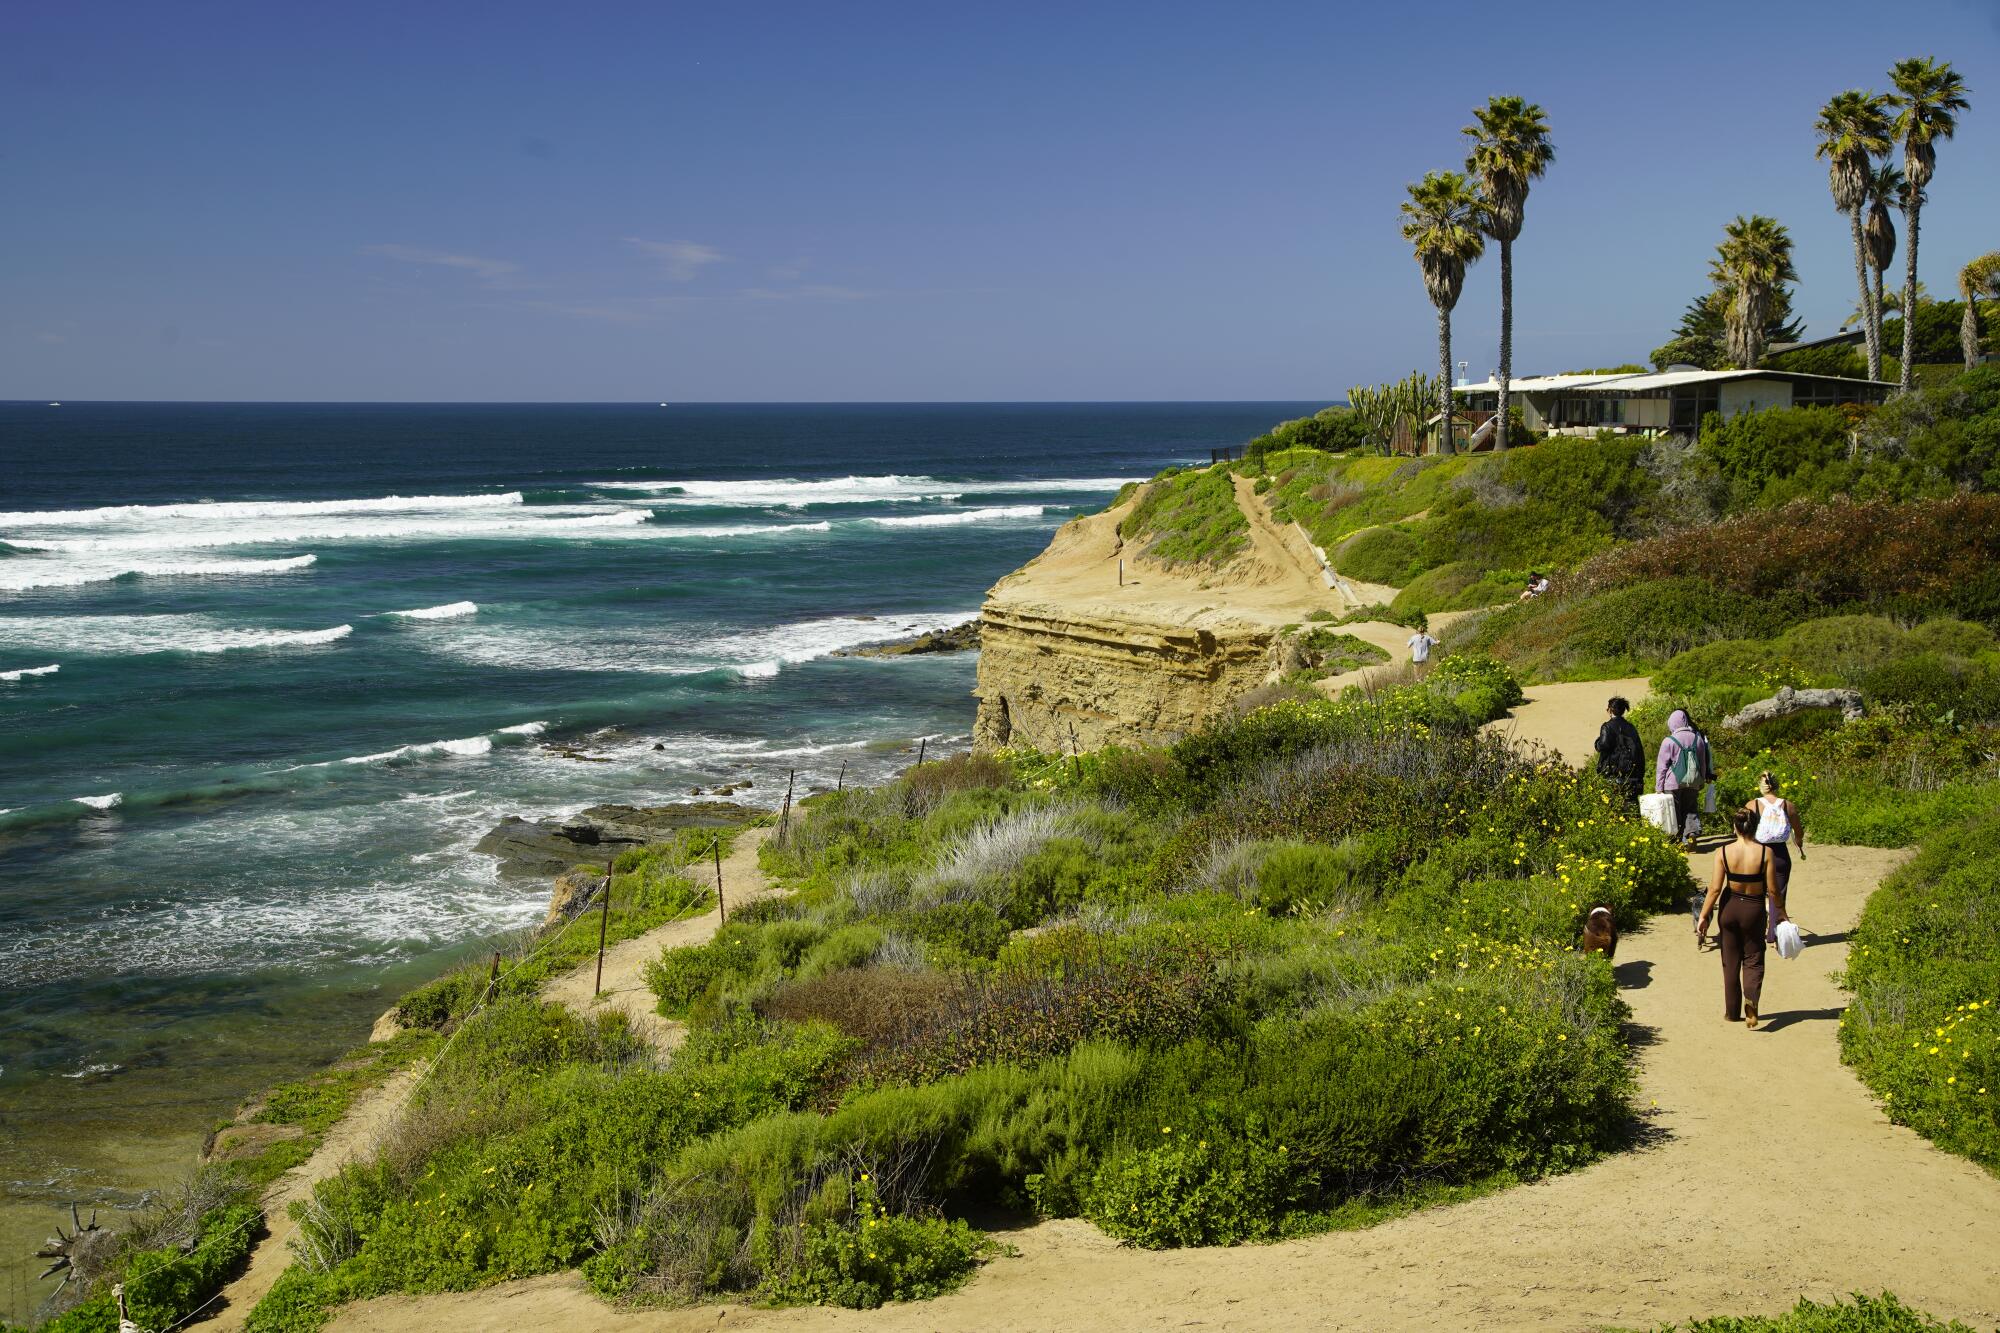 People walk along a sandy path atop verdant cliffs above ocean waves.